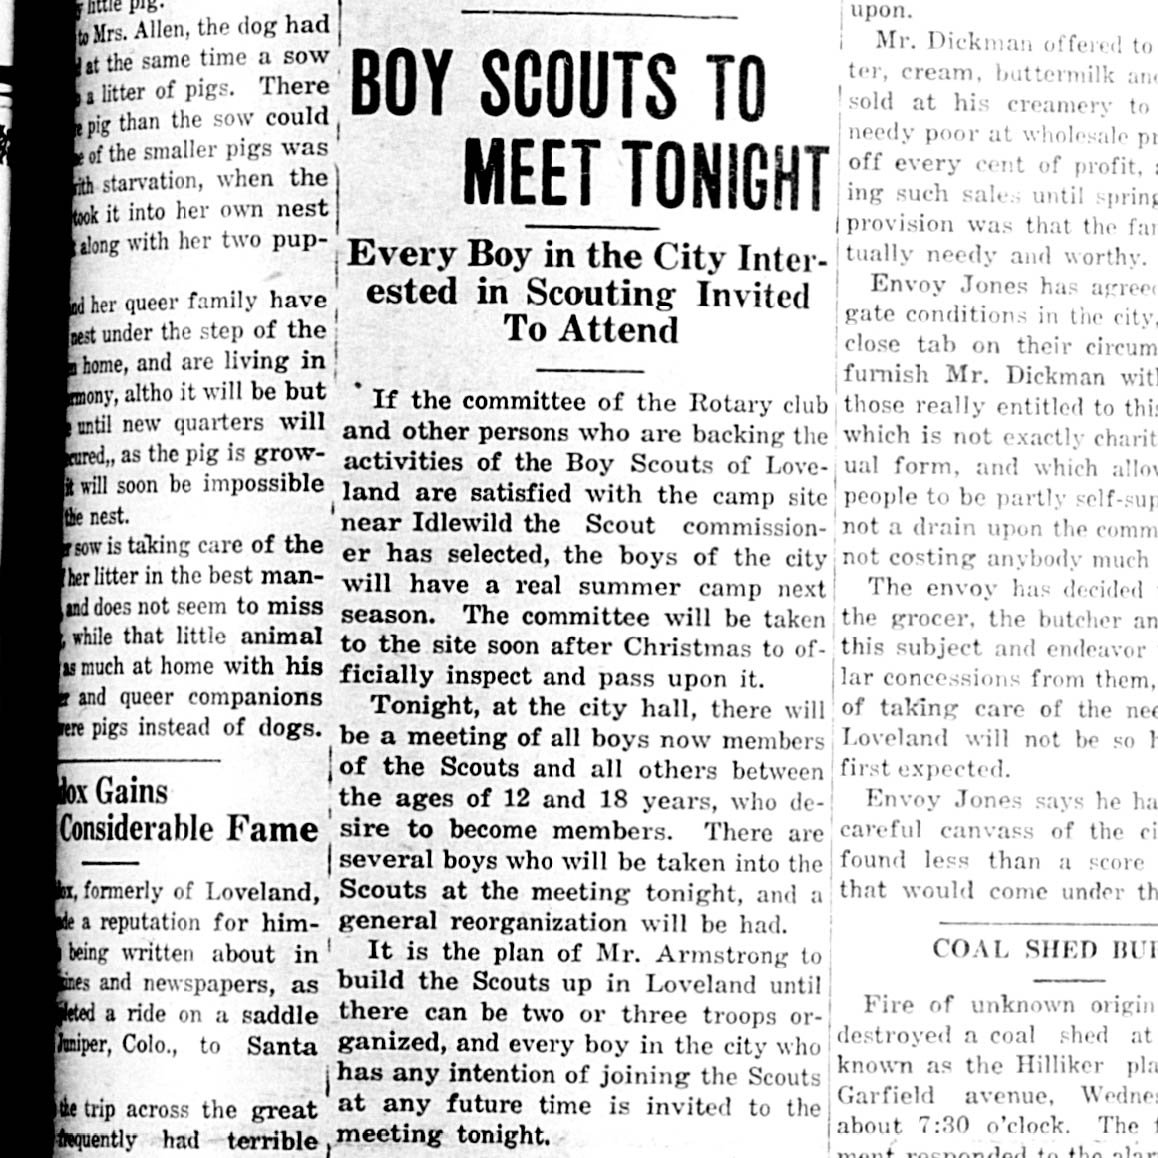 Idlewild Lodge - idlewildlodge.github.io - 1921-12-22 - Loveland Reporter - Boy scouts at Idlewild